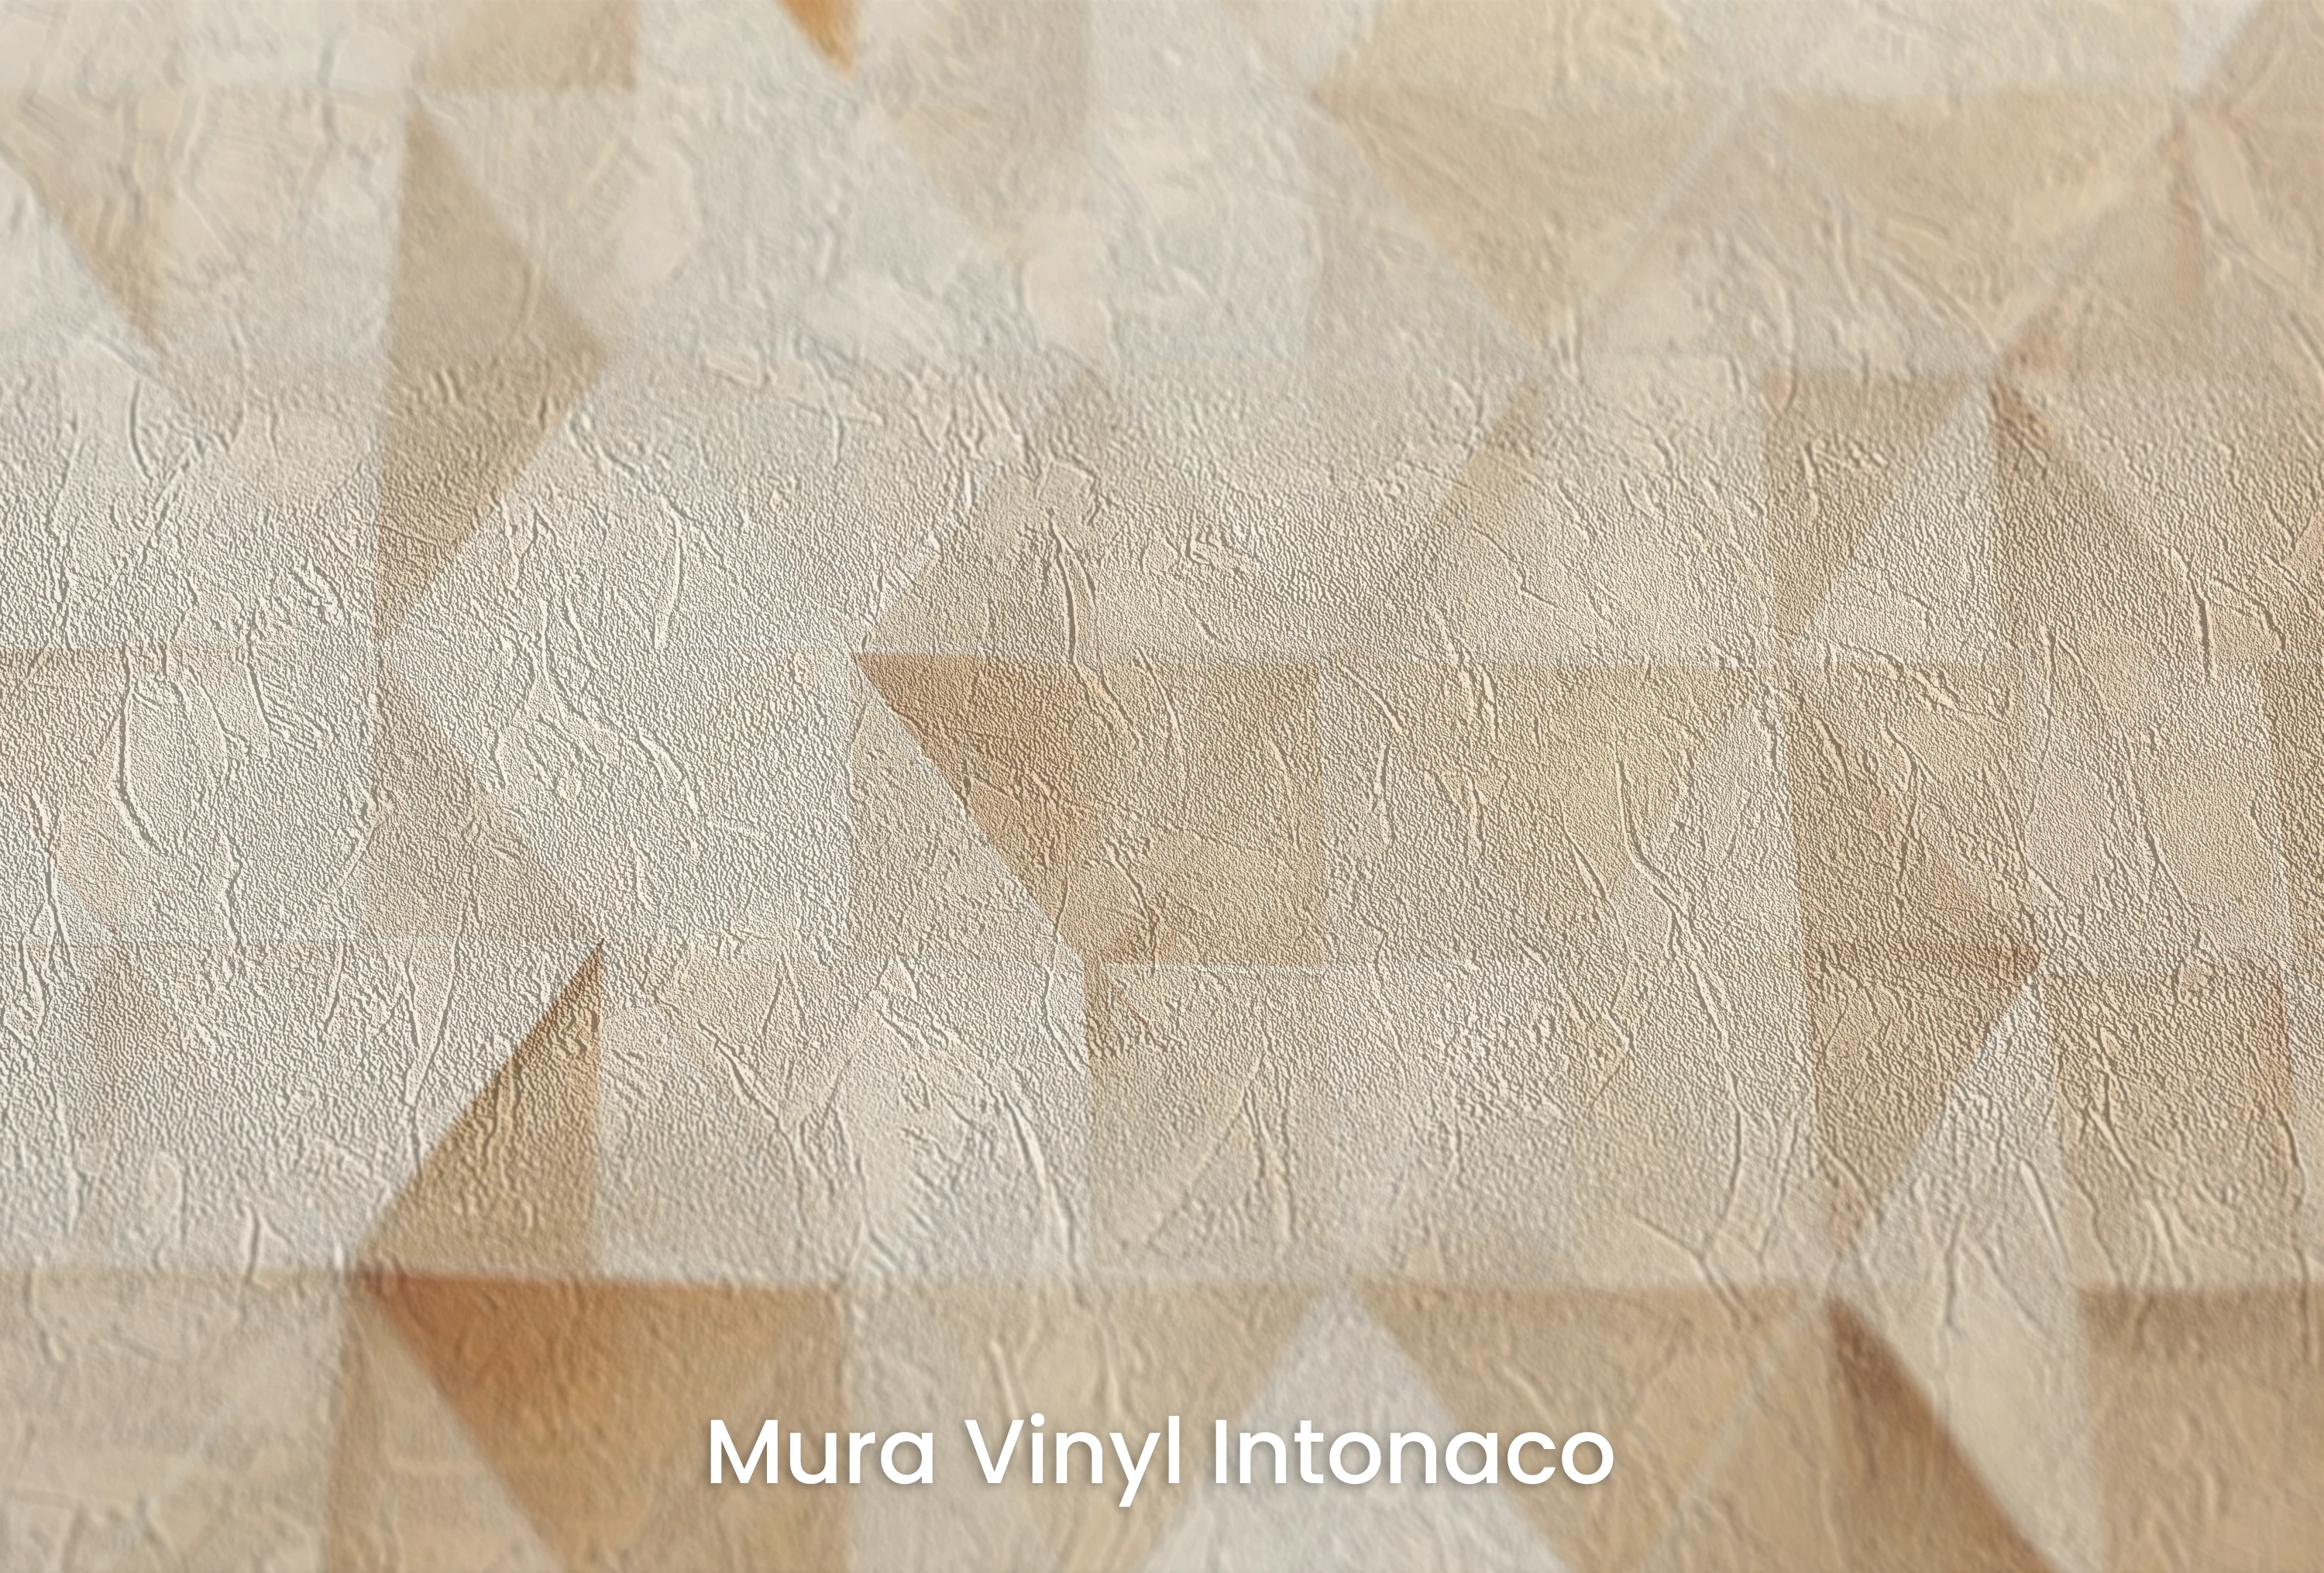 Mura Vinyl Intonaco - Wallpaper with a texture of grated plaster